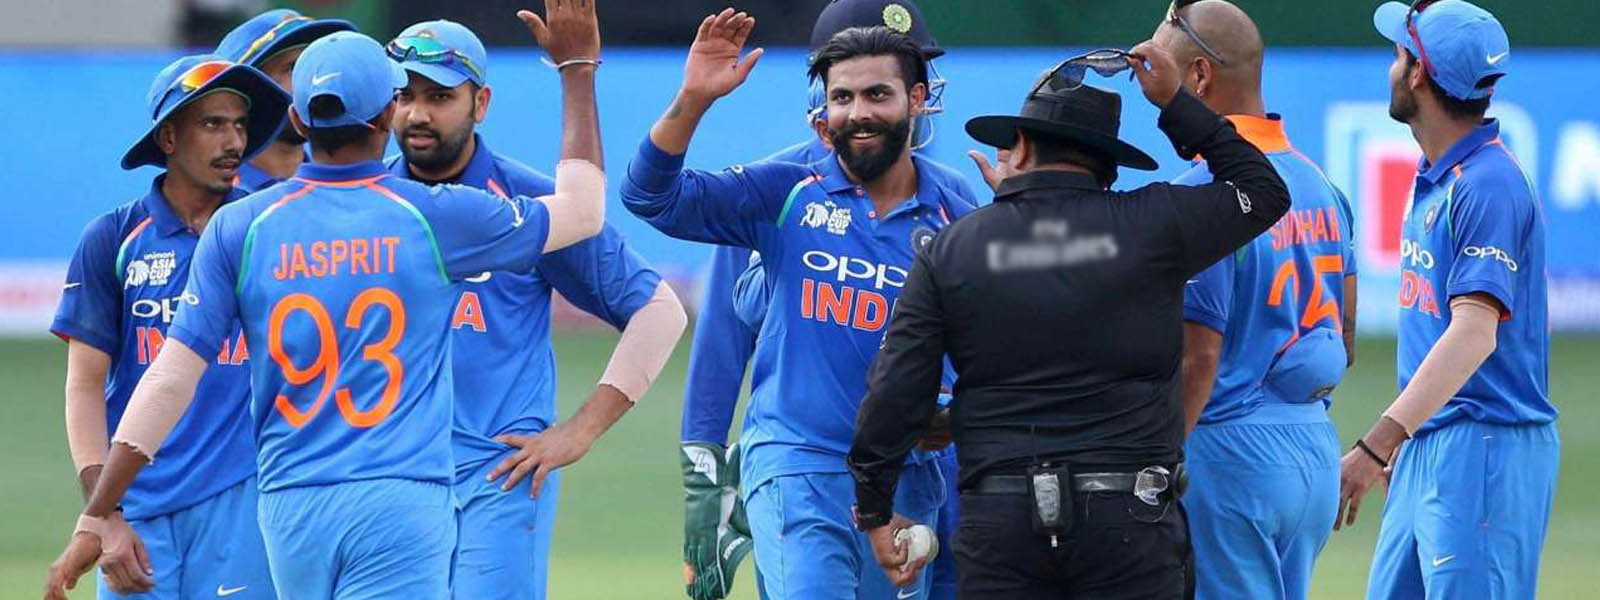 Cricket-Jadeja shines for India in comeback match